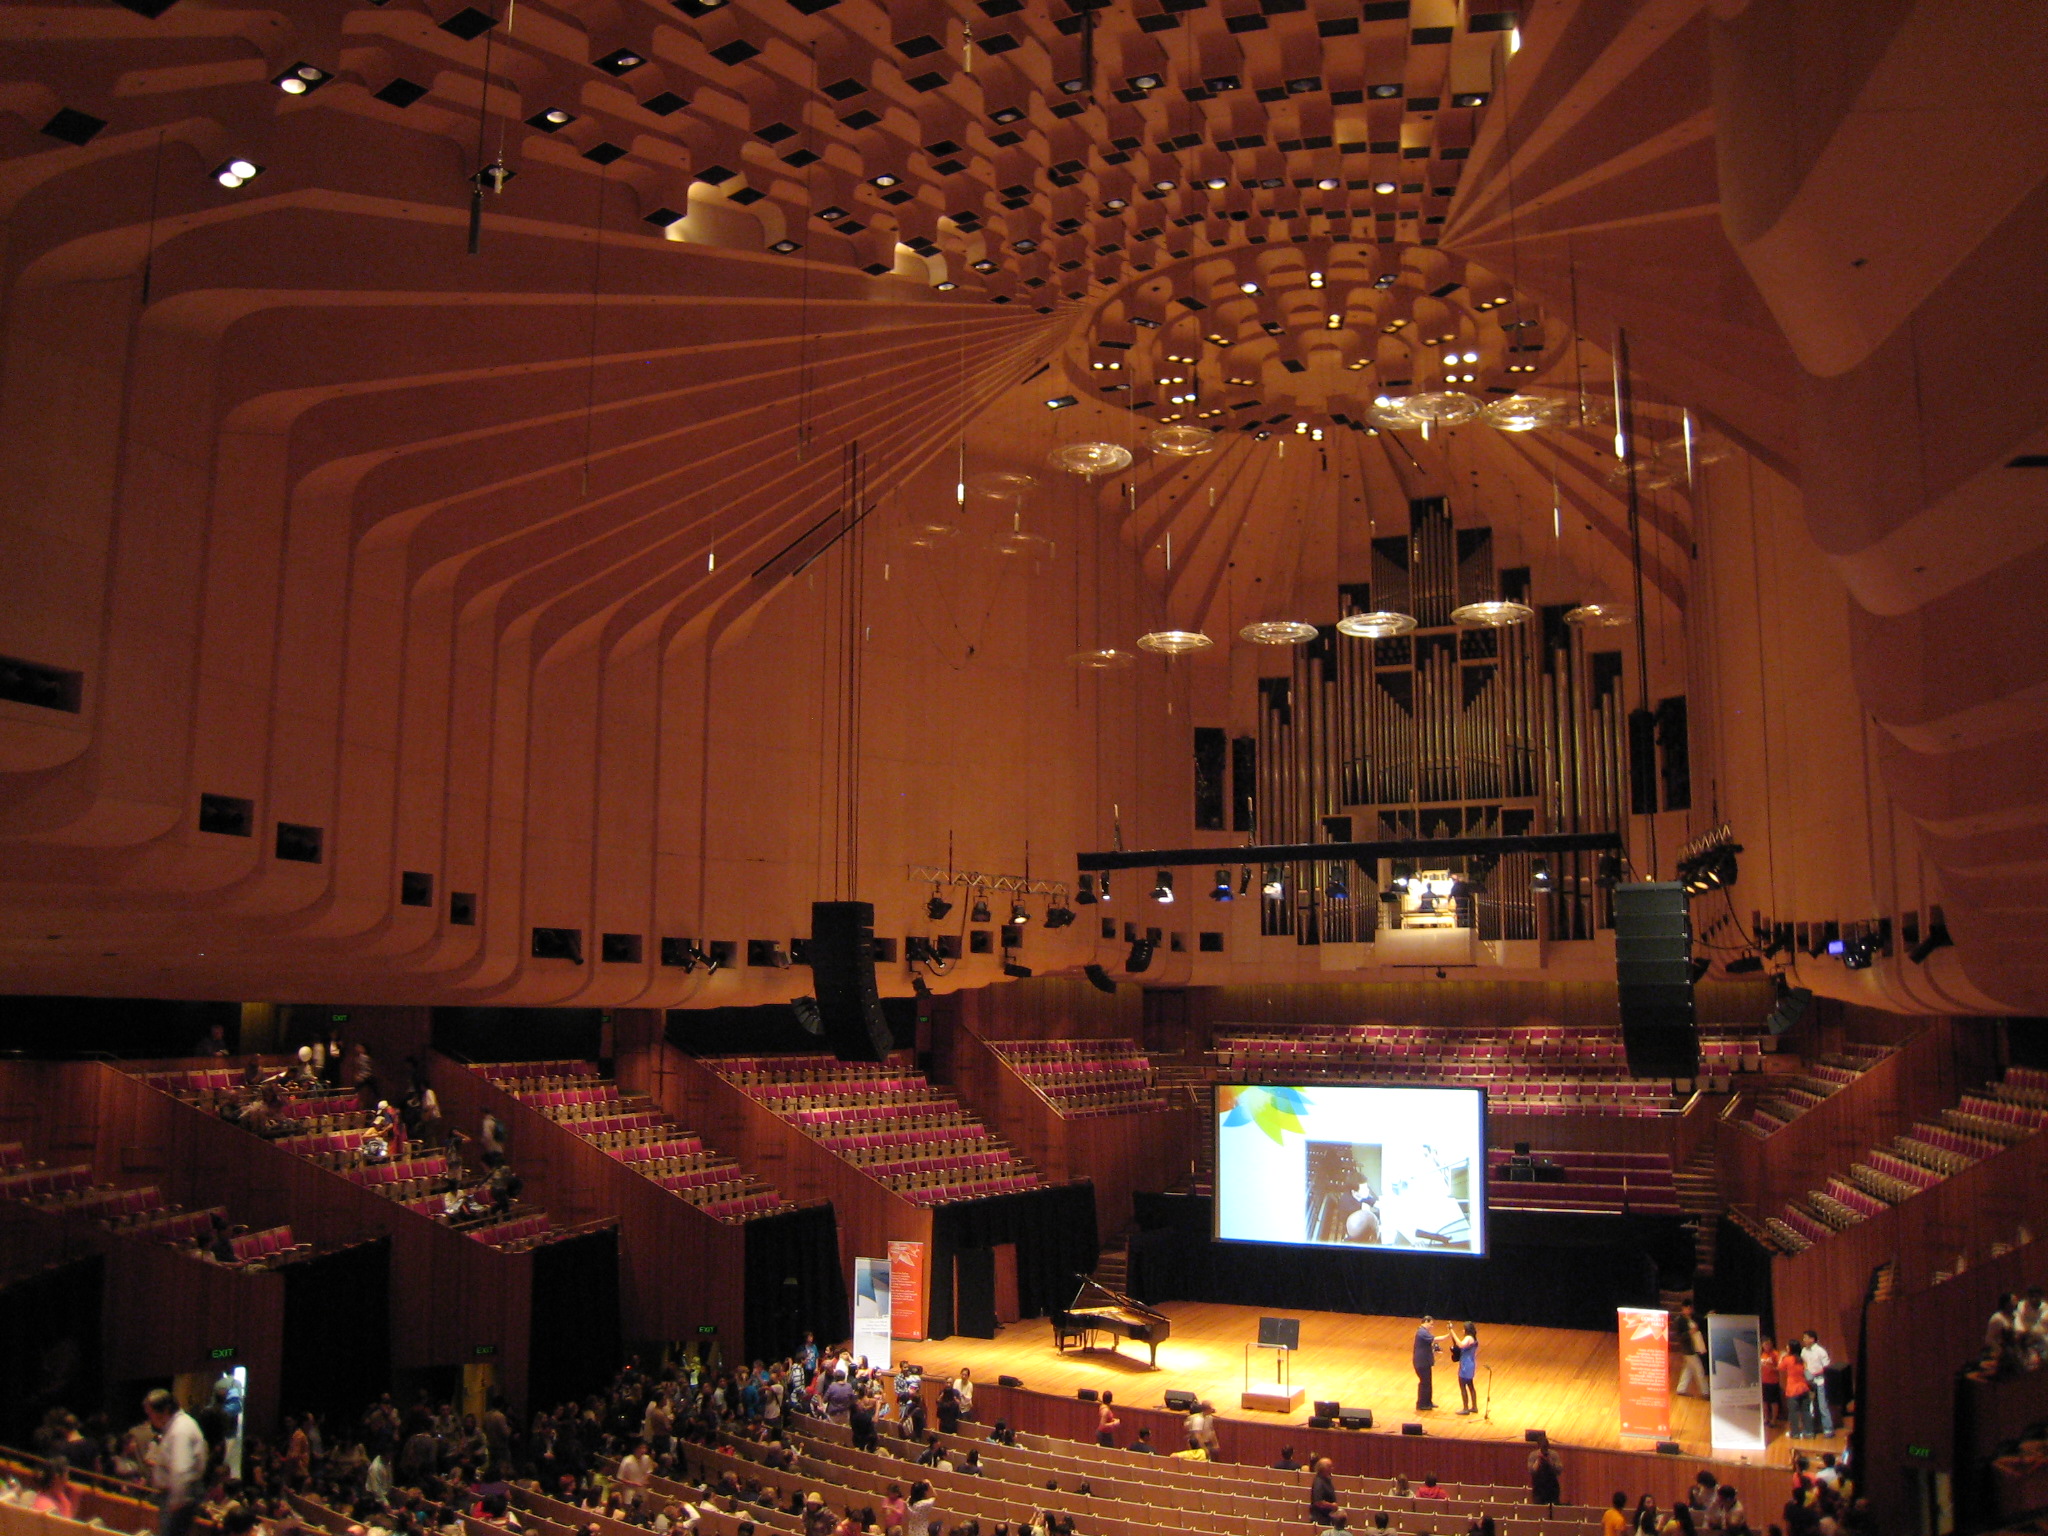 Sydney Opera House Playhouse Seating Chart